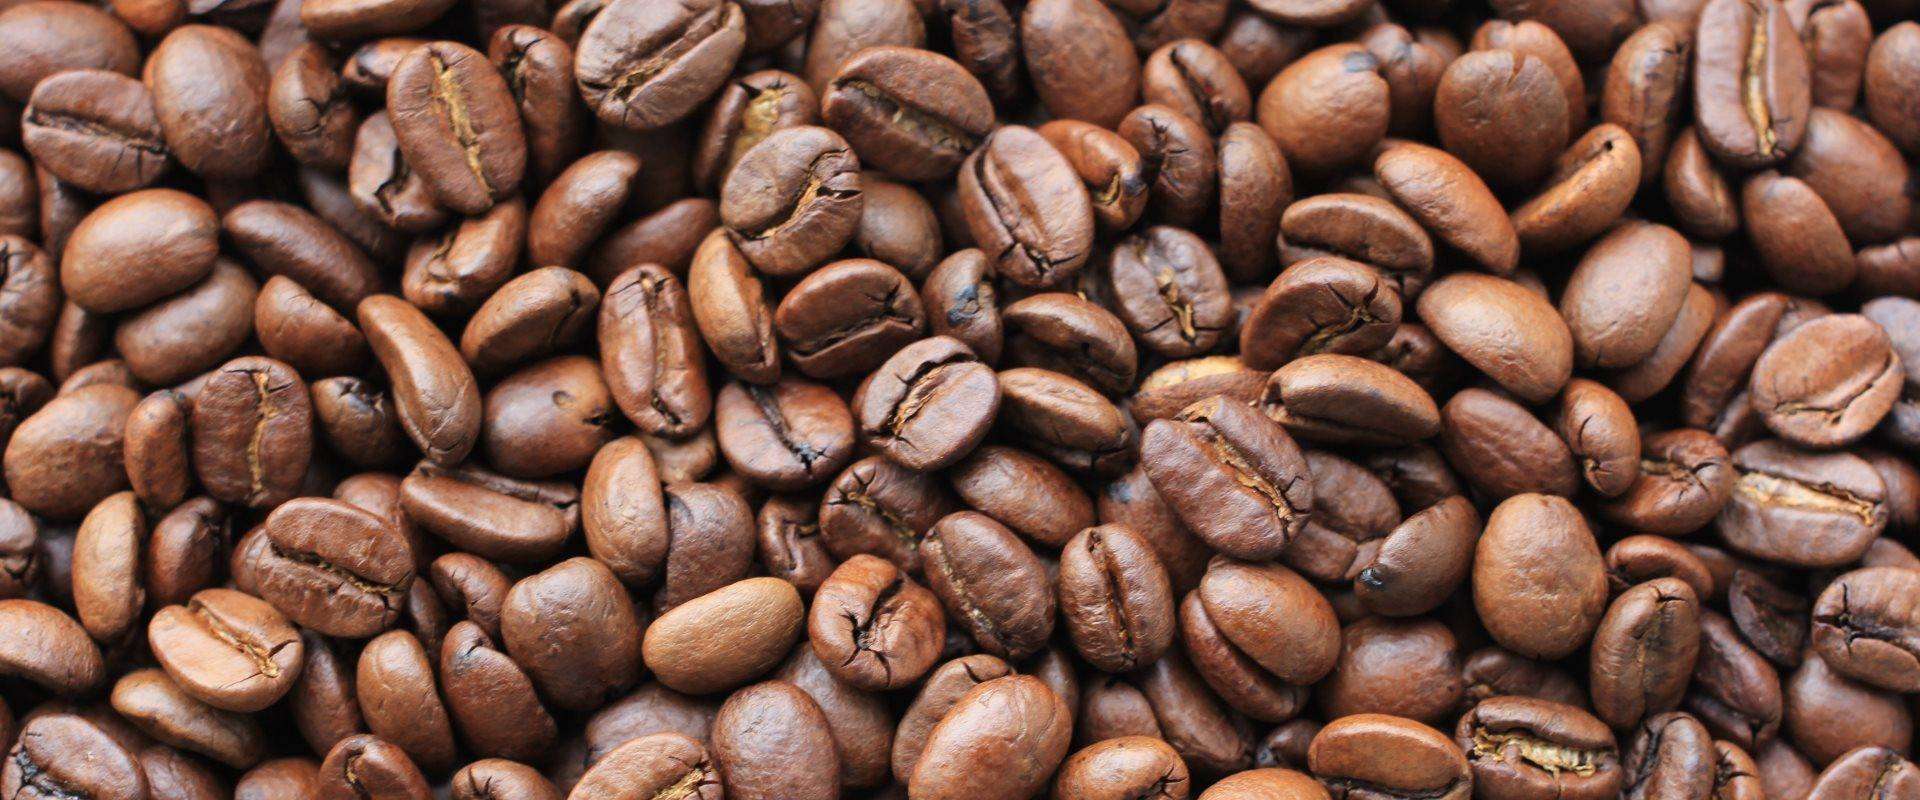 Buy Fresh Roasted Coffee Beans Online